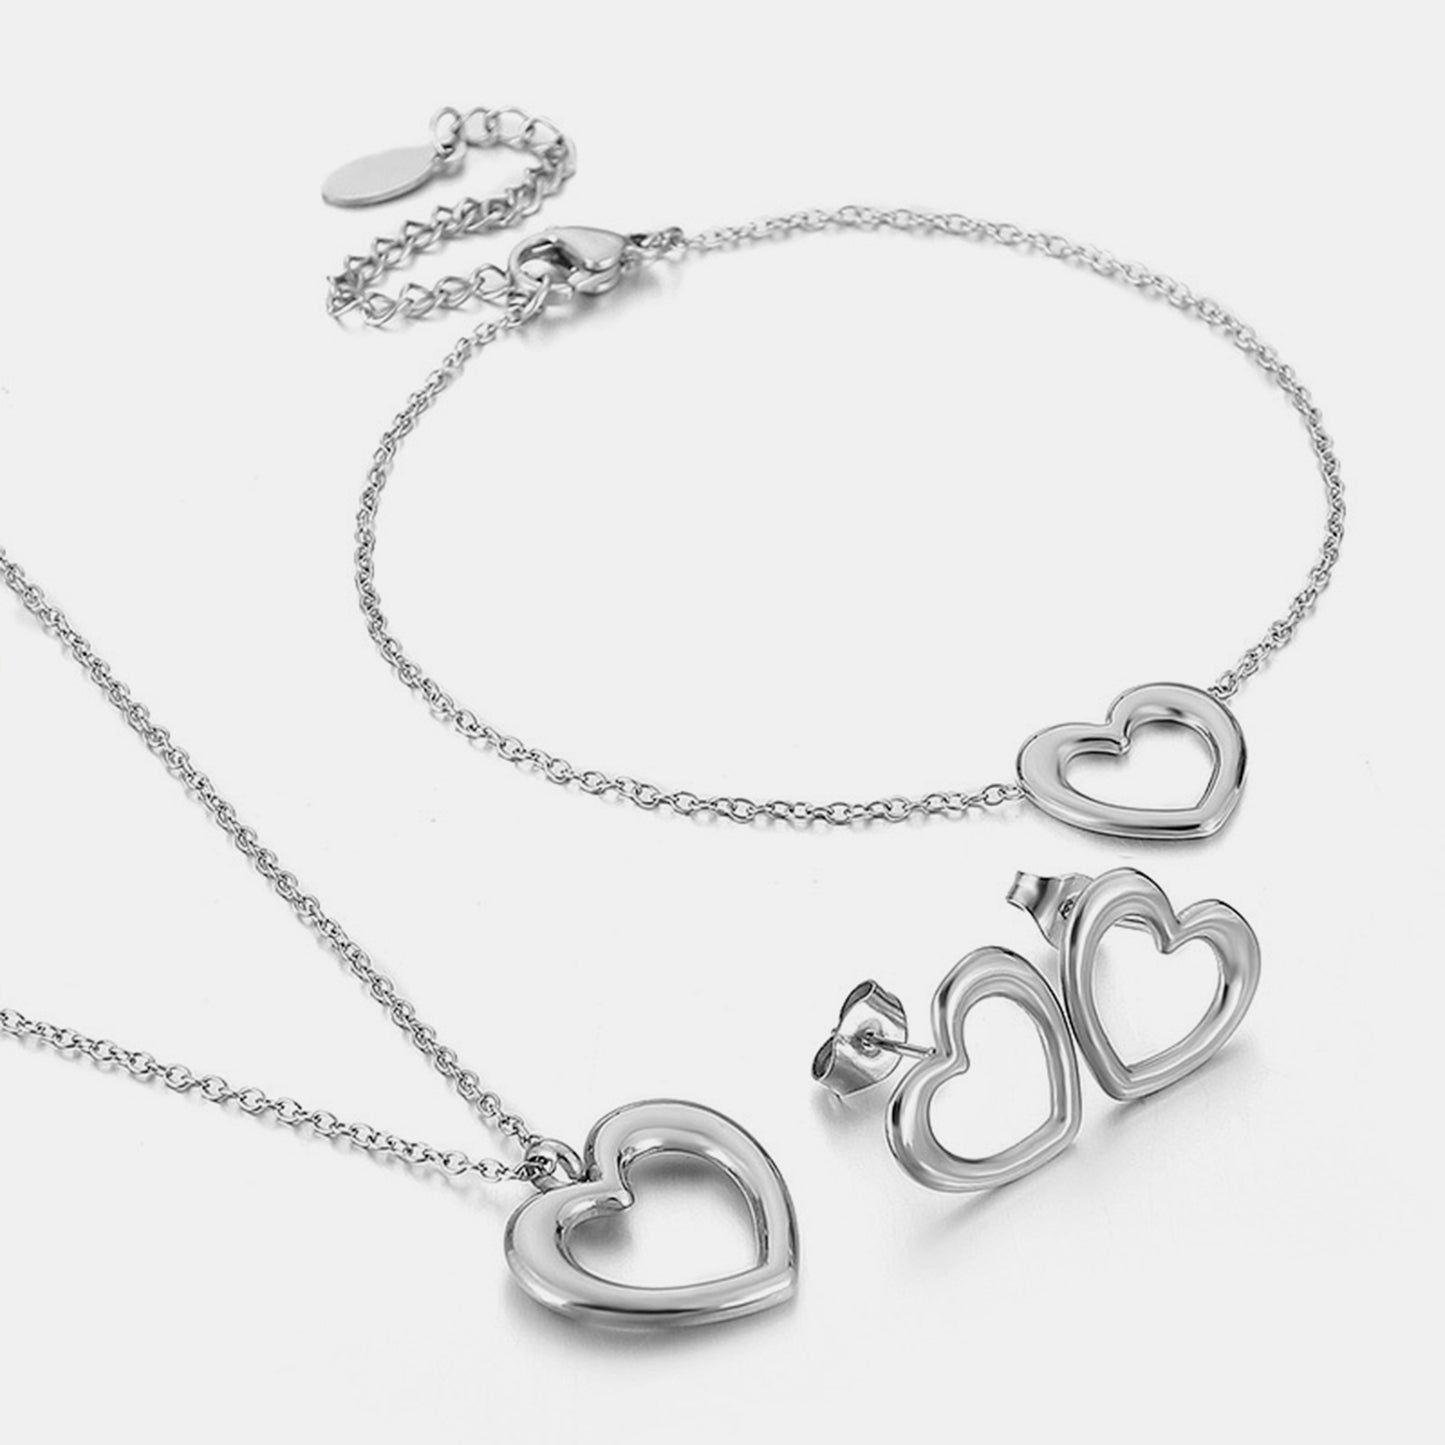 Classy Heart Jewelry Gift Set